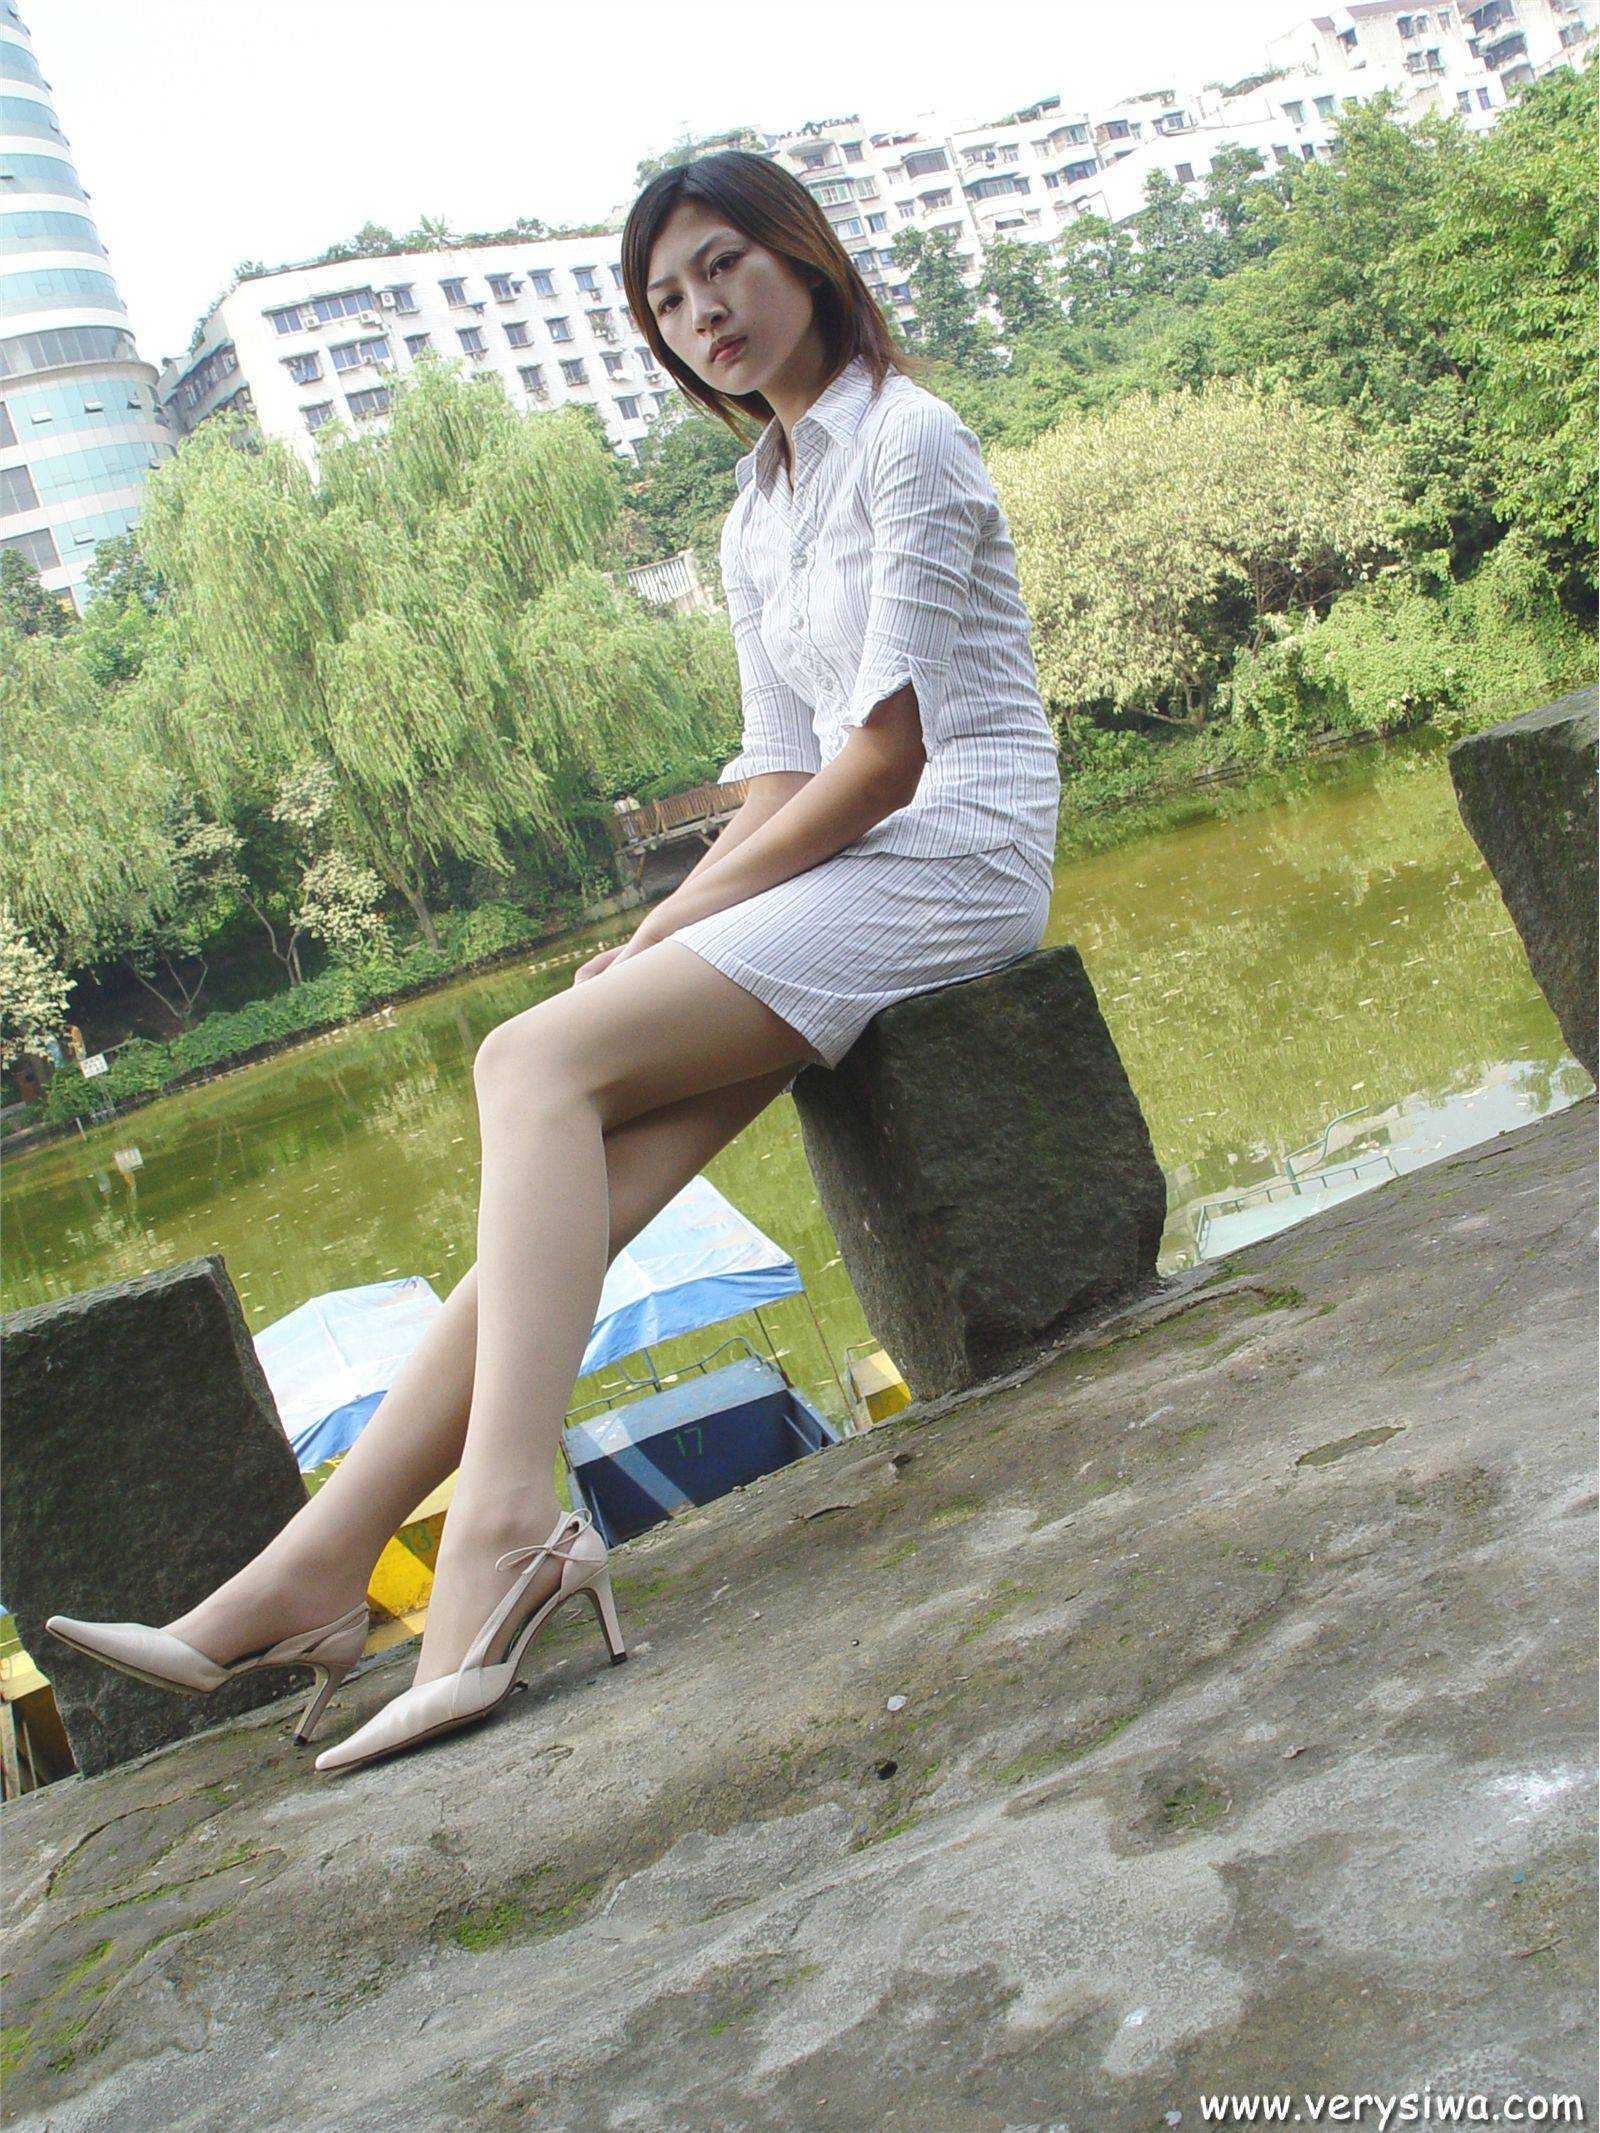 [zhonggaoyi] p003 (candy + Vivian) domestic silk stockings sexy beauty picture